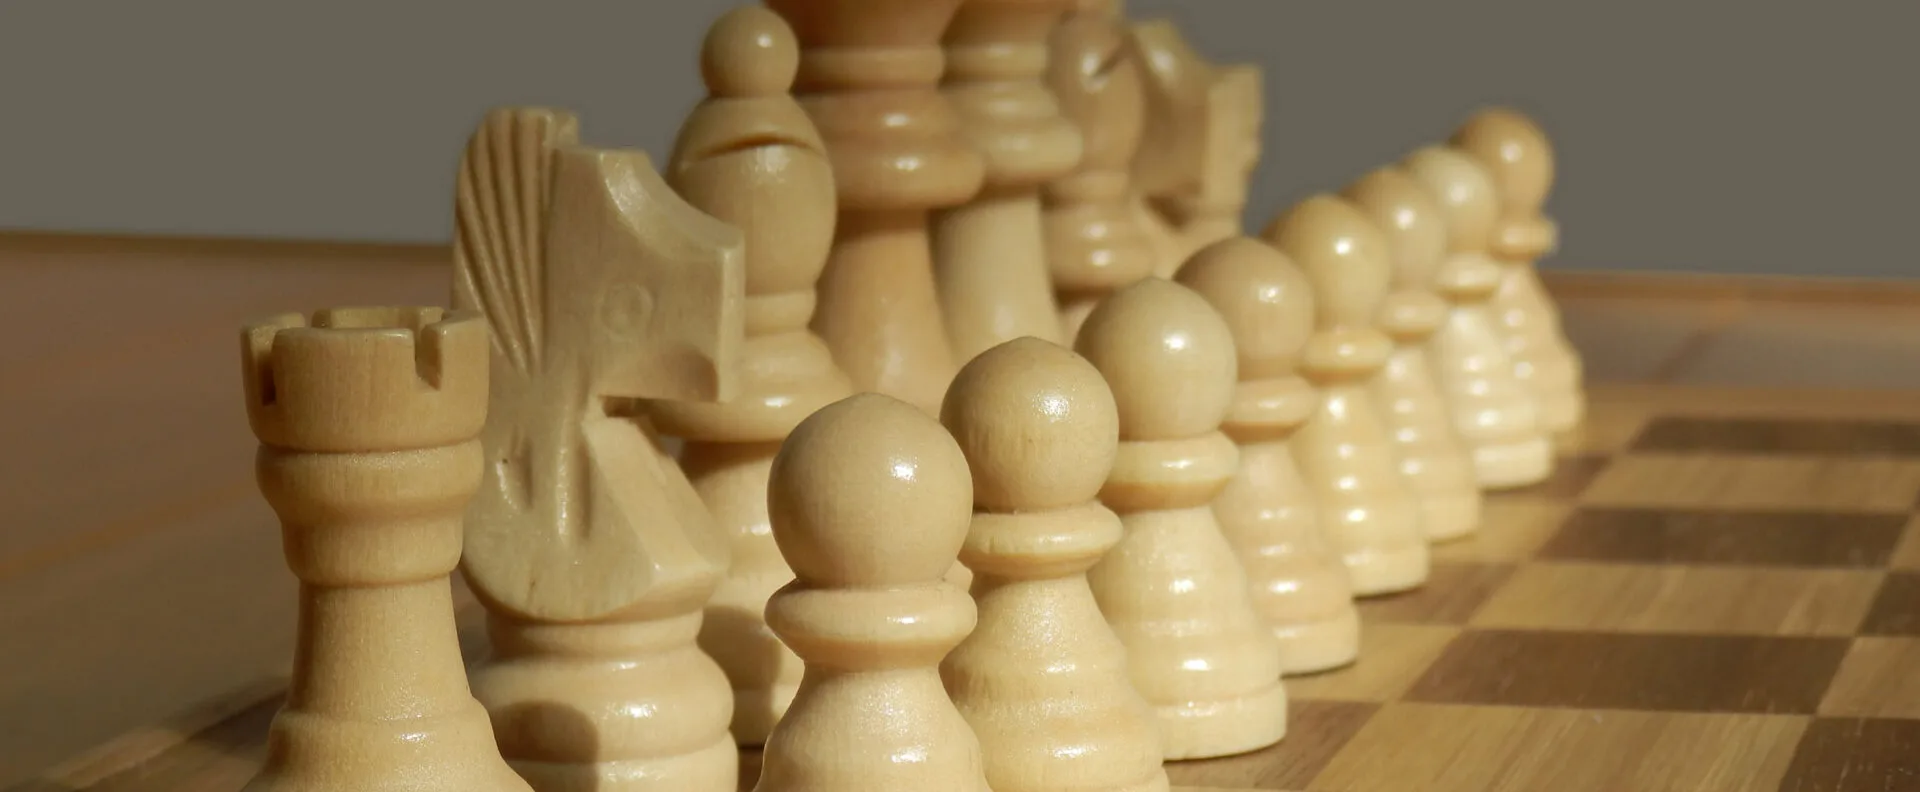 Ver categoría de ajedrez de madera profesional